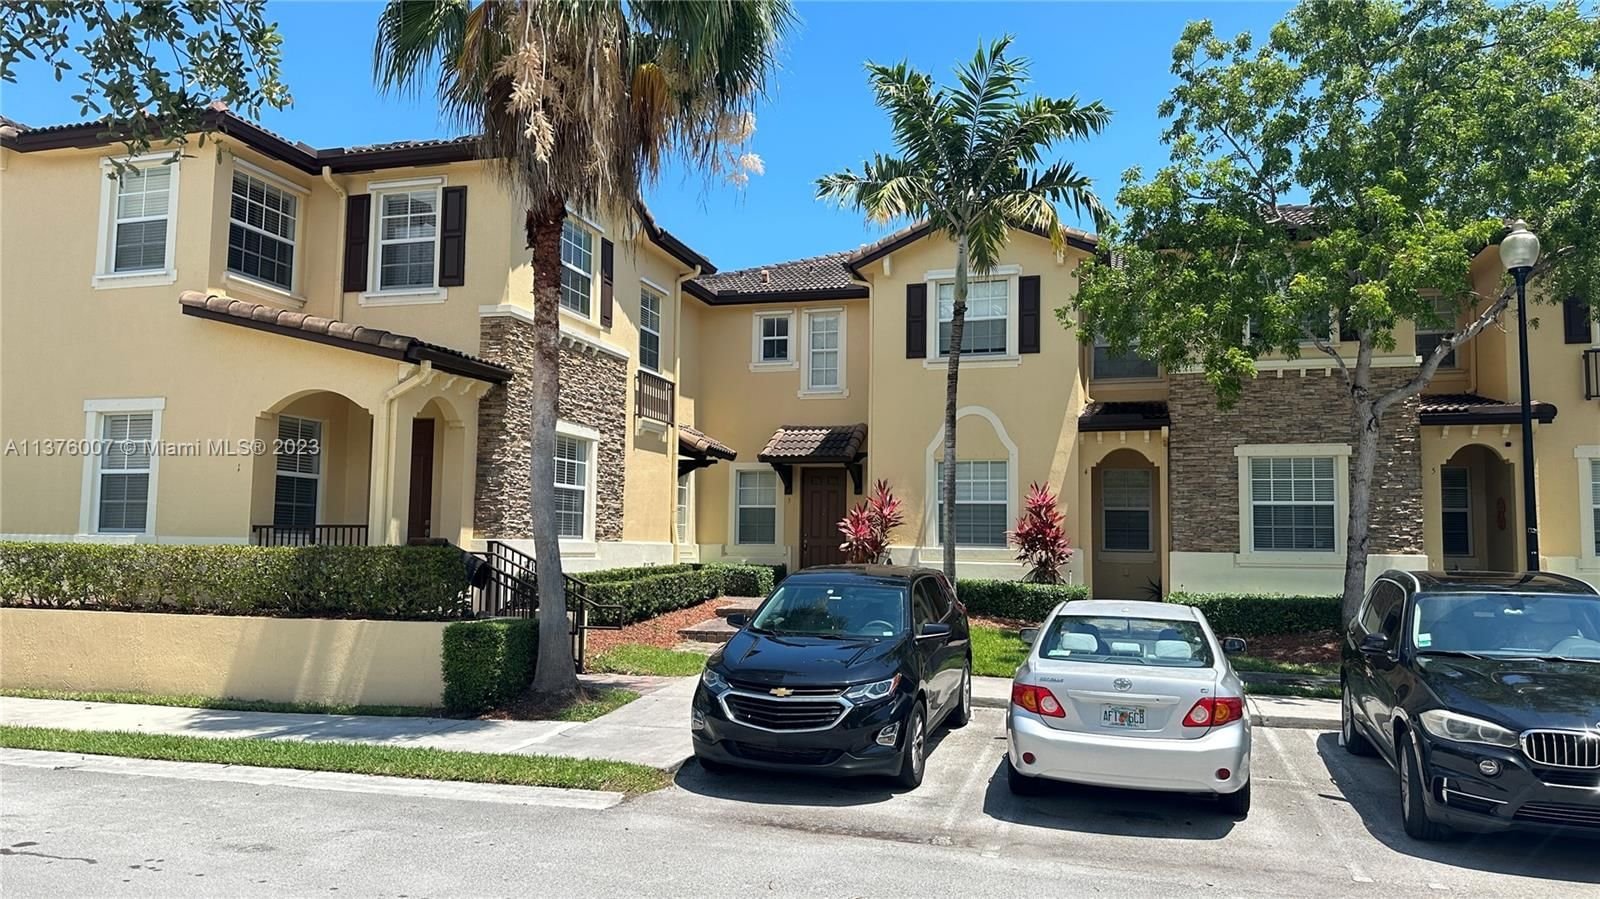 Real estate property located at 9165 227th St #3, Miami-Dade County, THE SHORES CONDO NO 2, Cutler Bay, FL